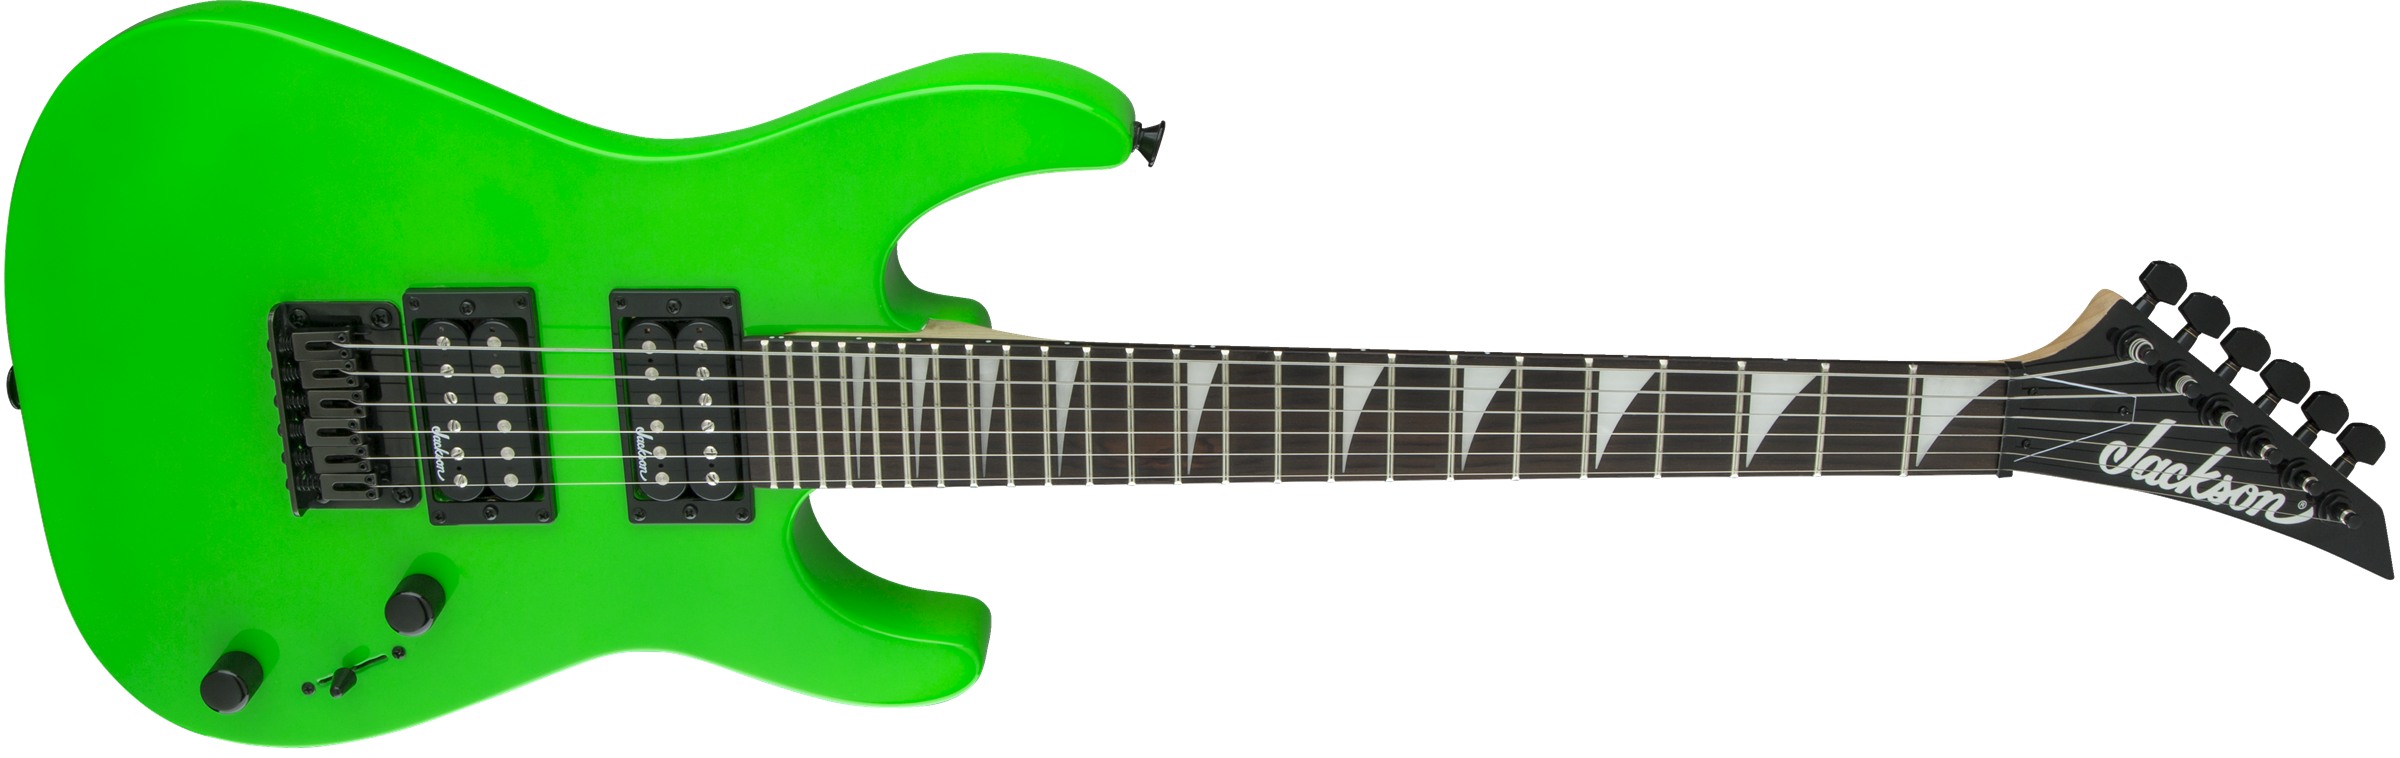 گیتار الکتریک جکسون مدل جی اس 1 ایکس دینکی مینیون نئون سبز 